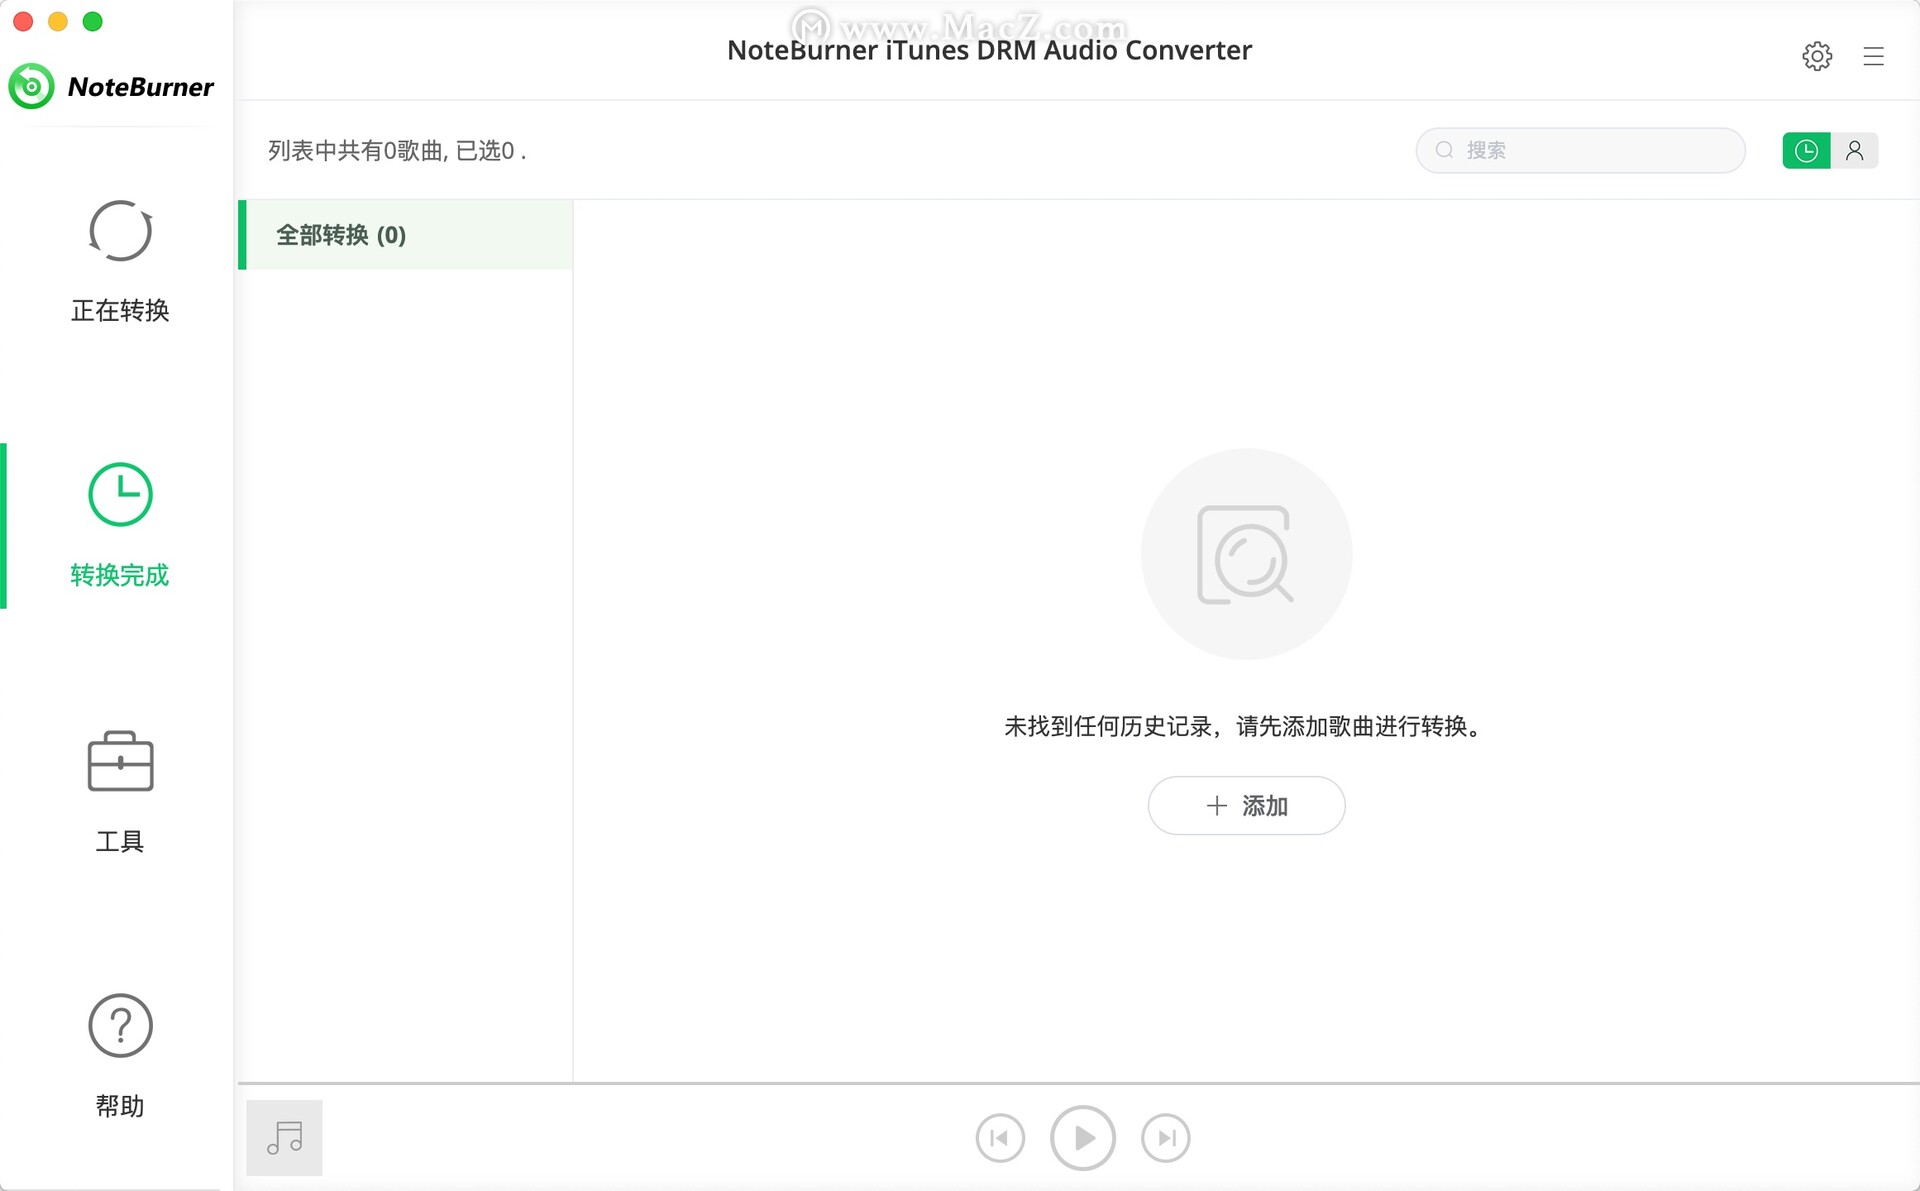 NoteBurner Mac音频转换器下载-NoteBurner iTunes DRM Audio Converter for Mac(DRM音频转换器) – Mac下载插图9